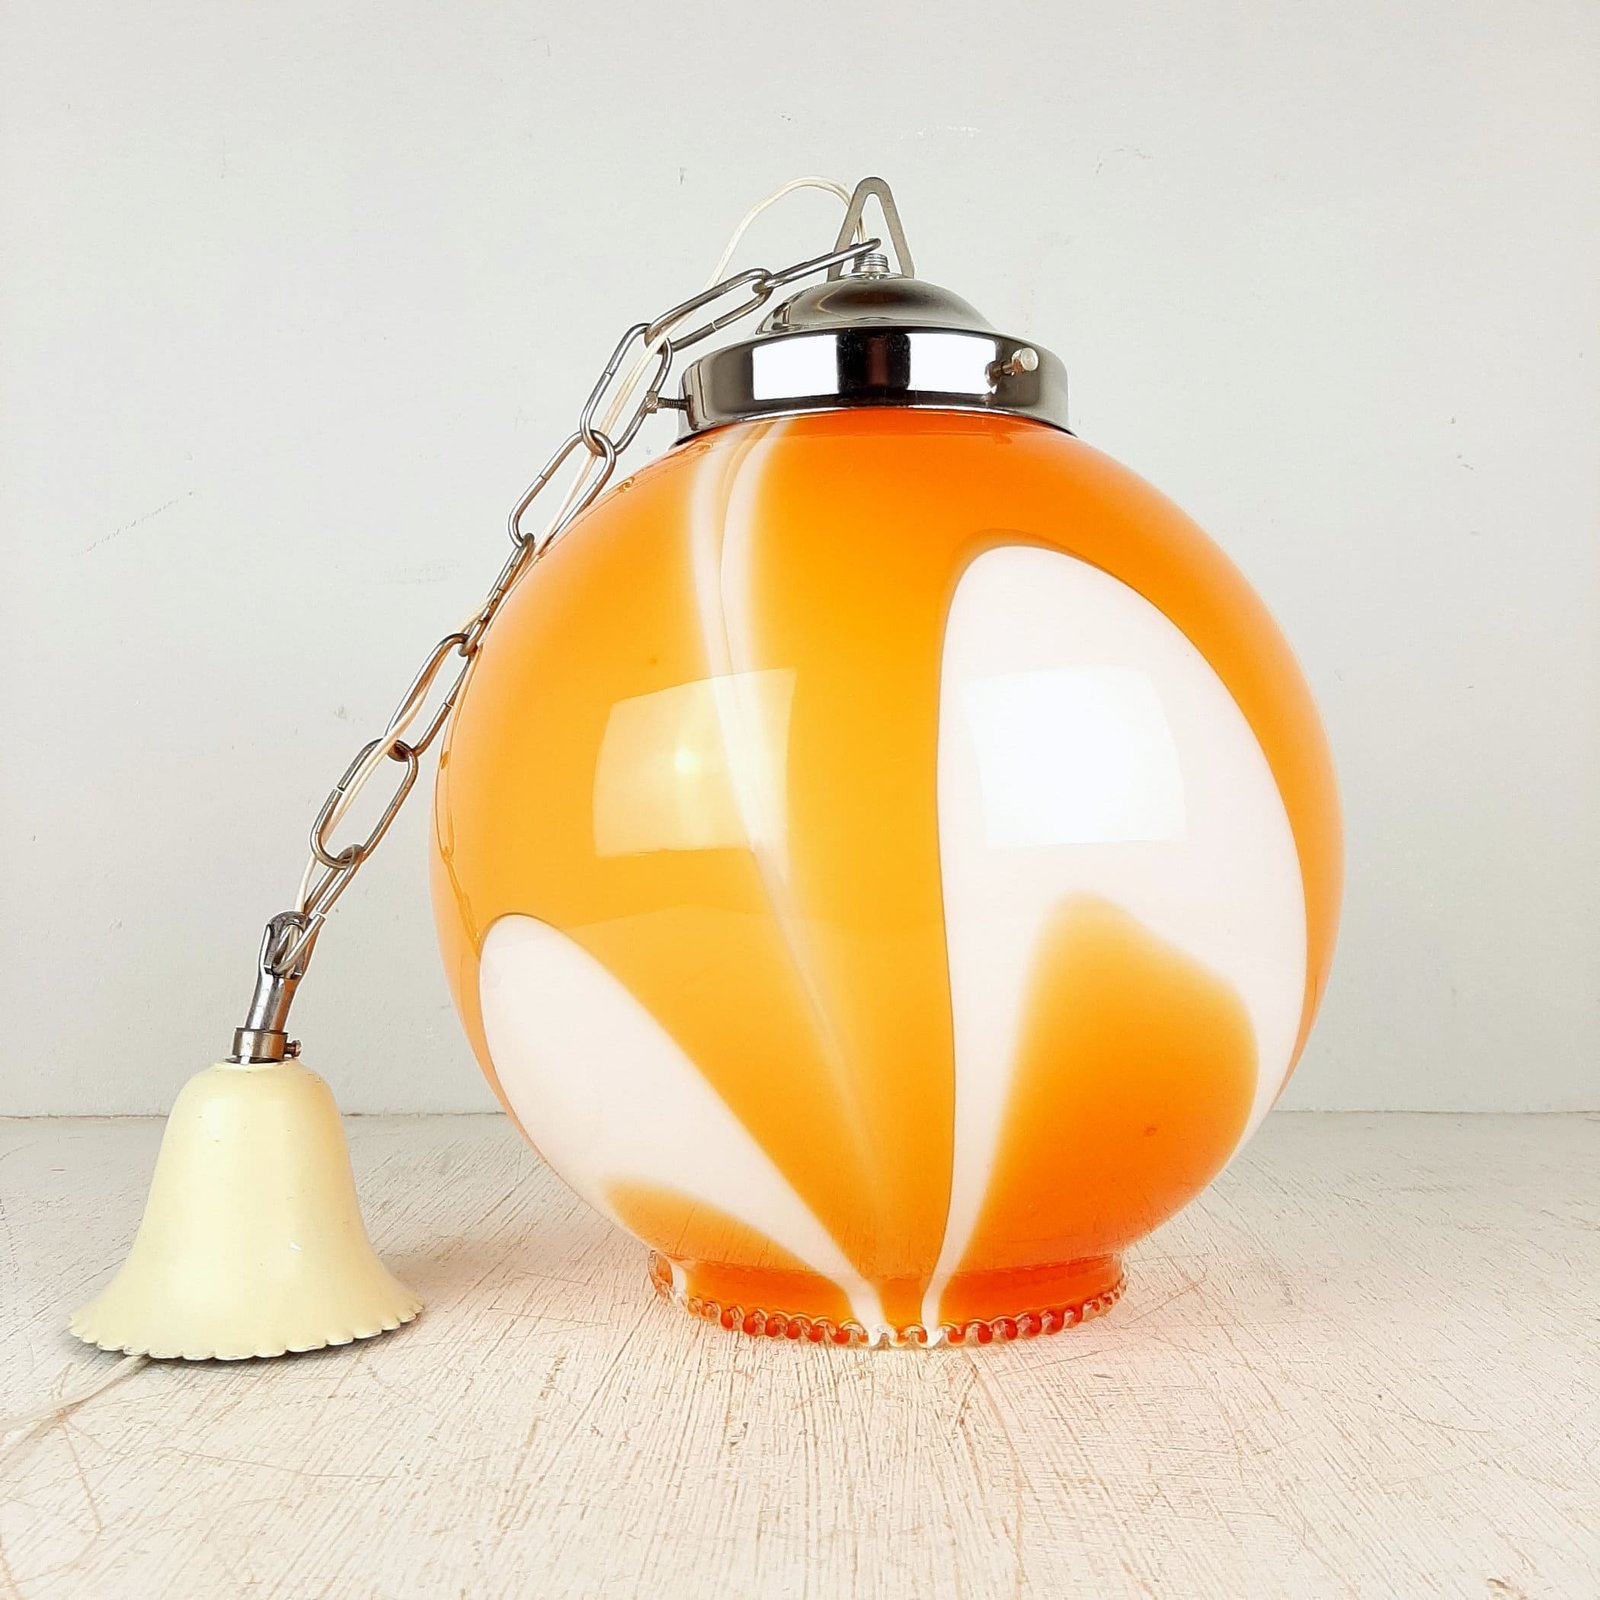 The beautiful retro pendant lamp